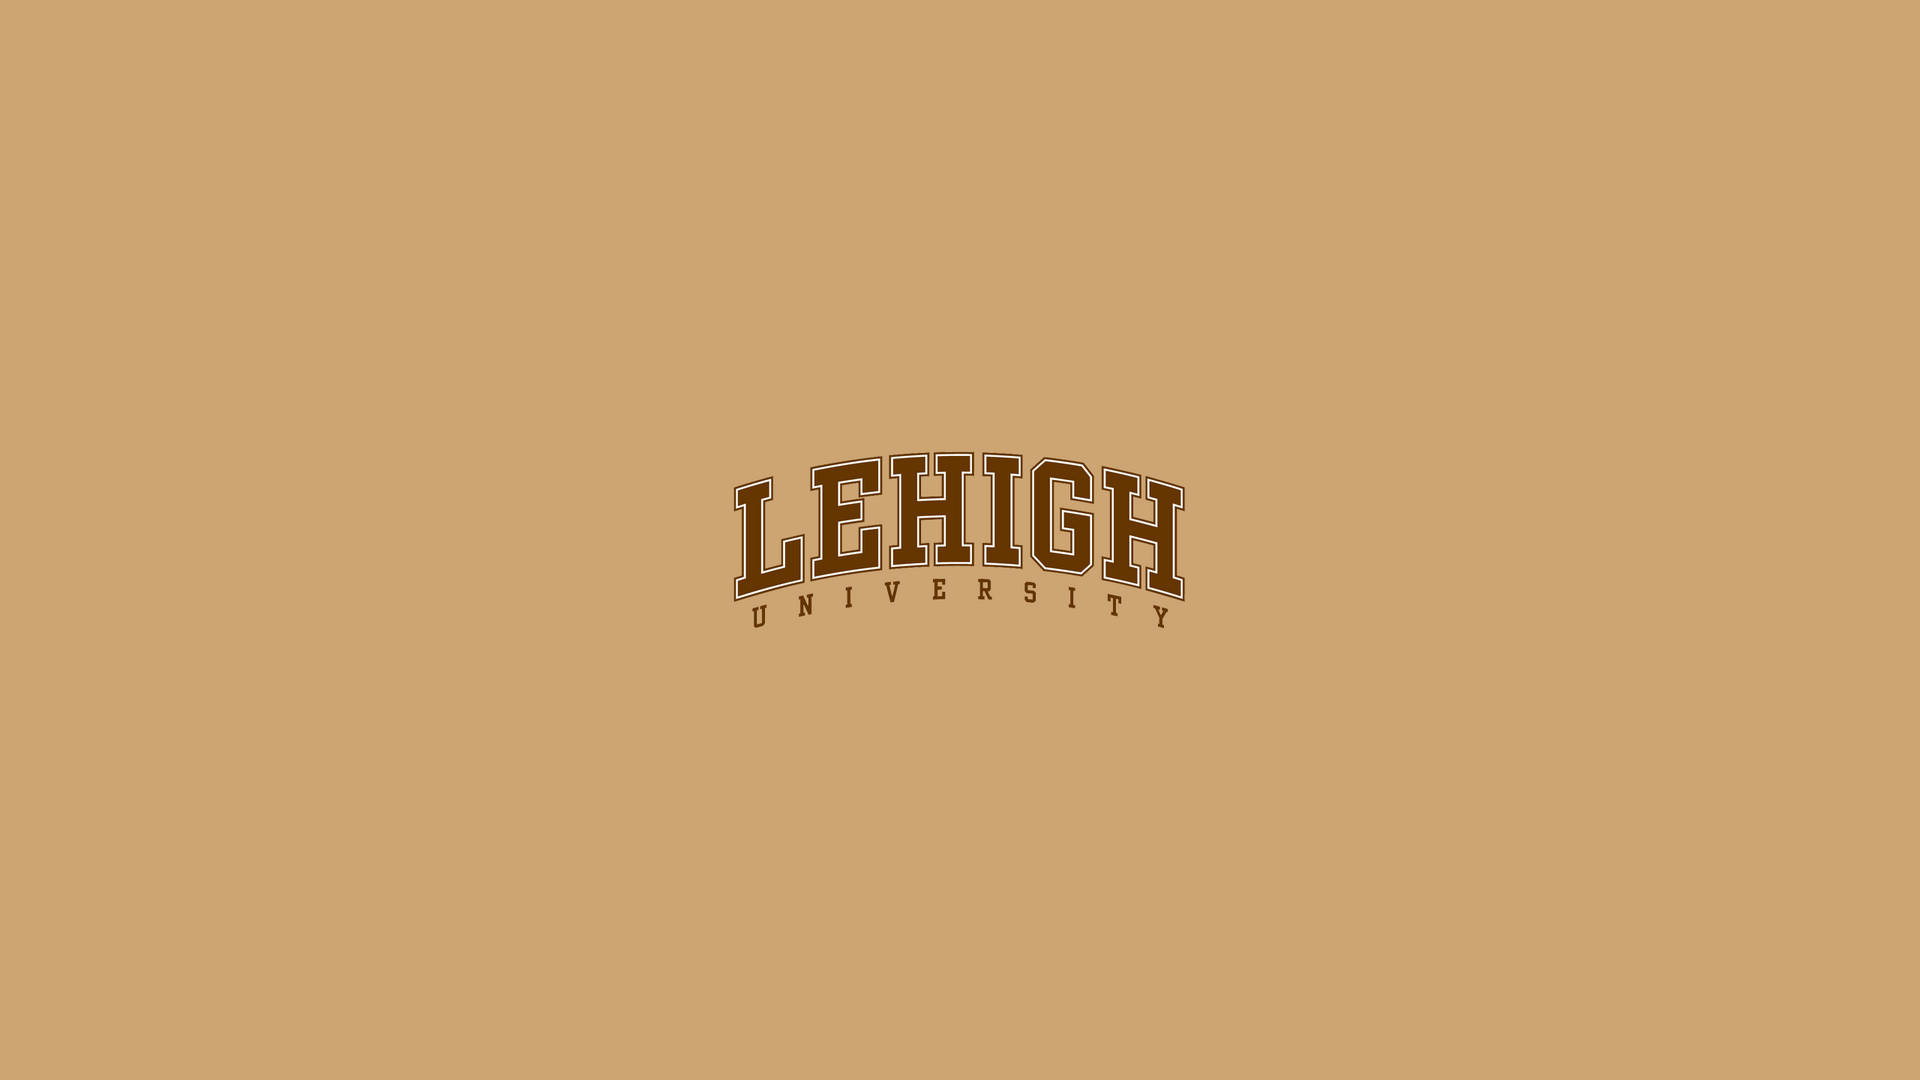 Lehigh University Bilder